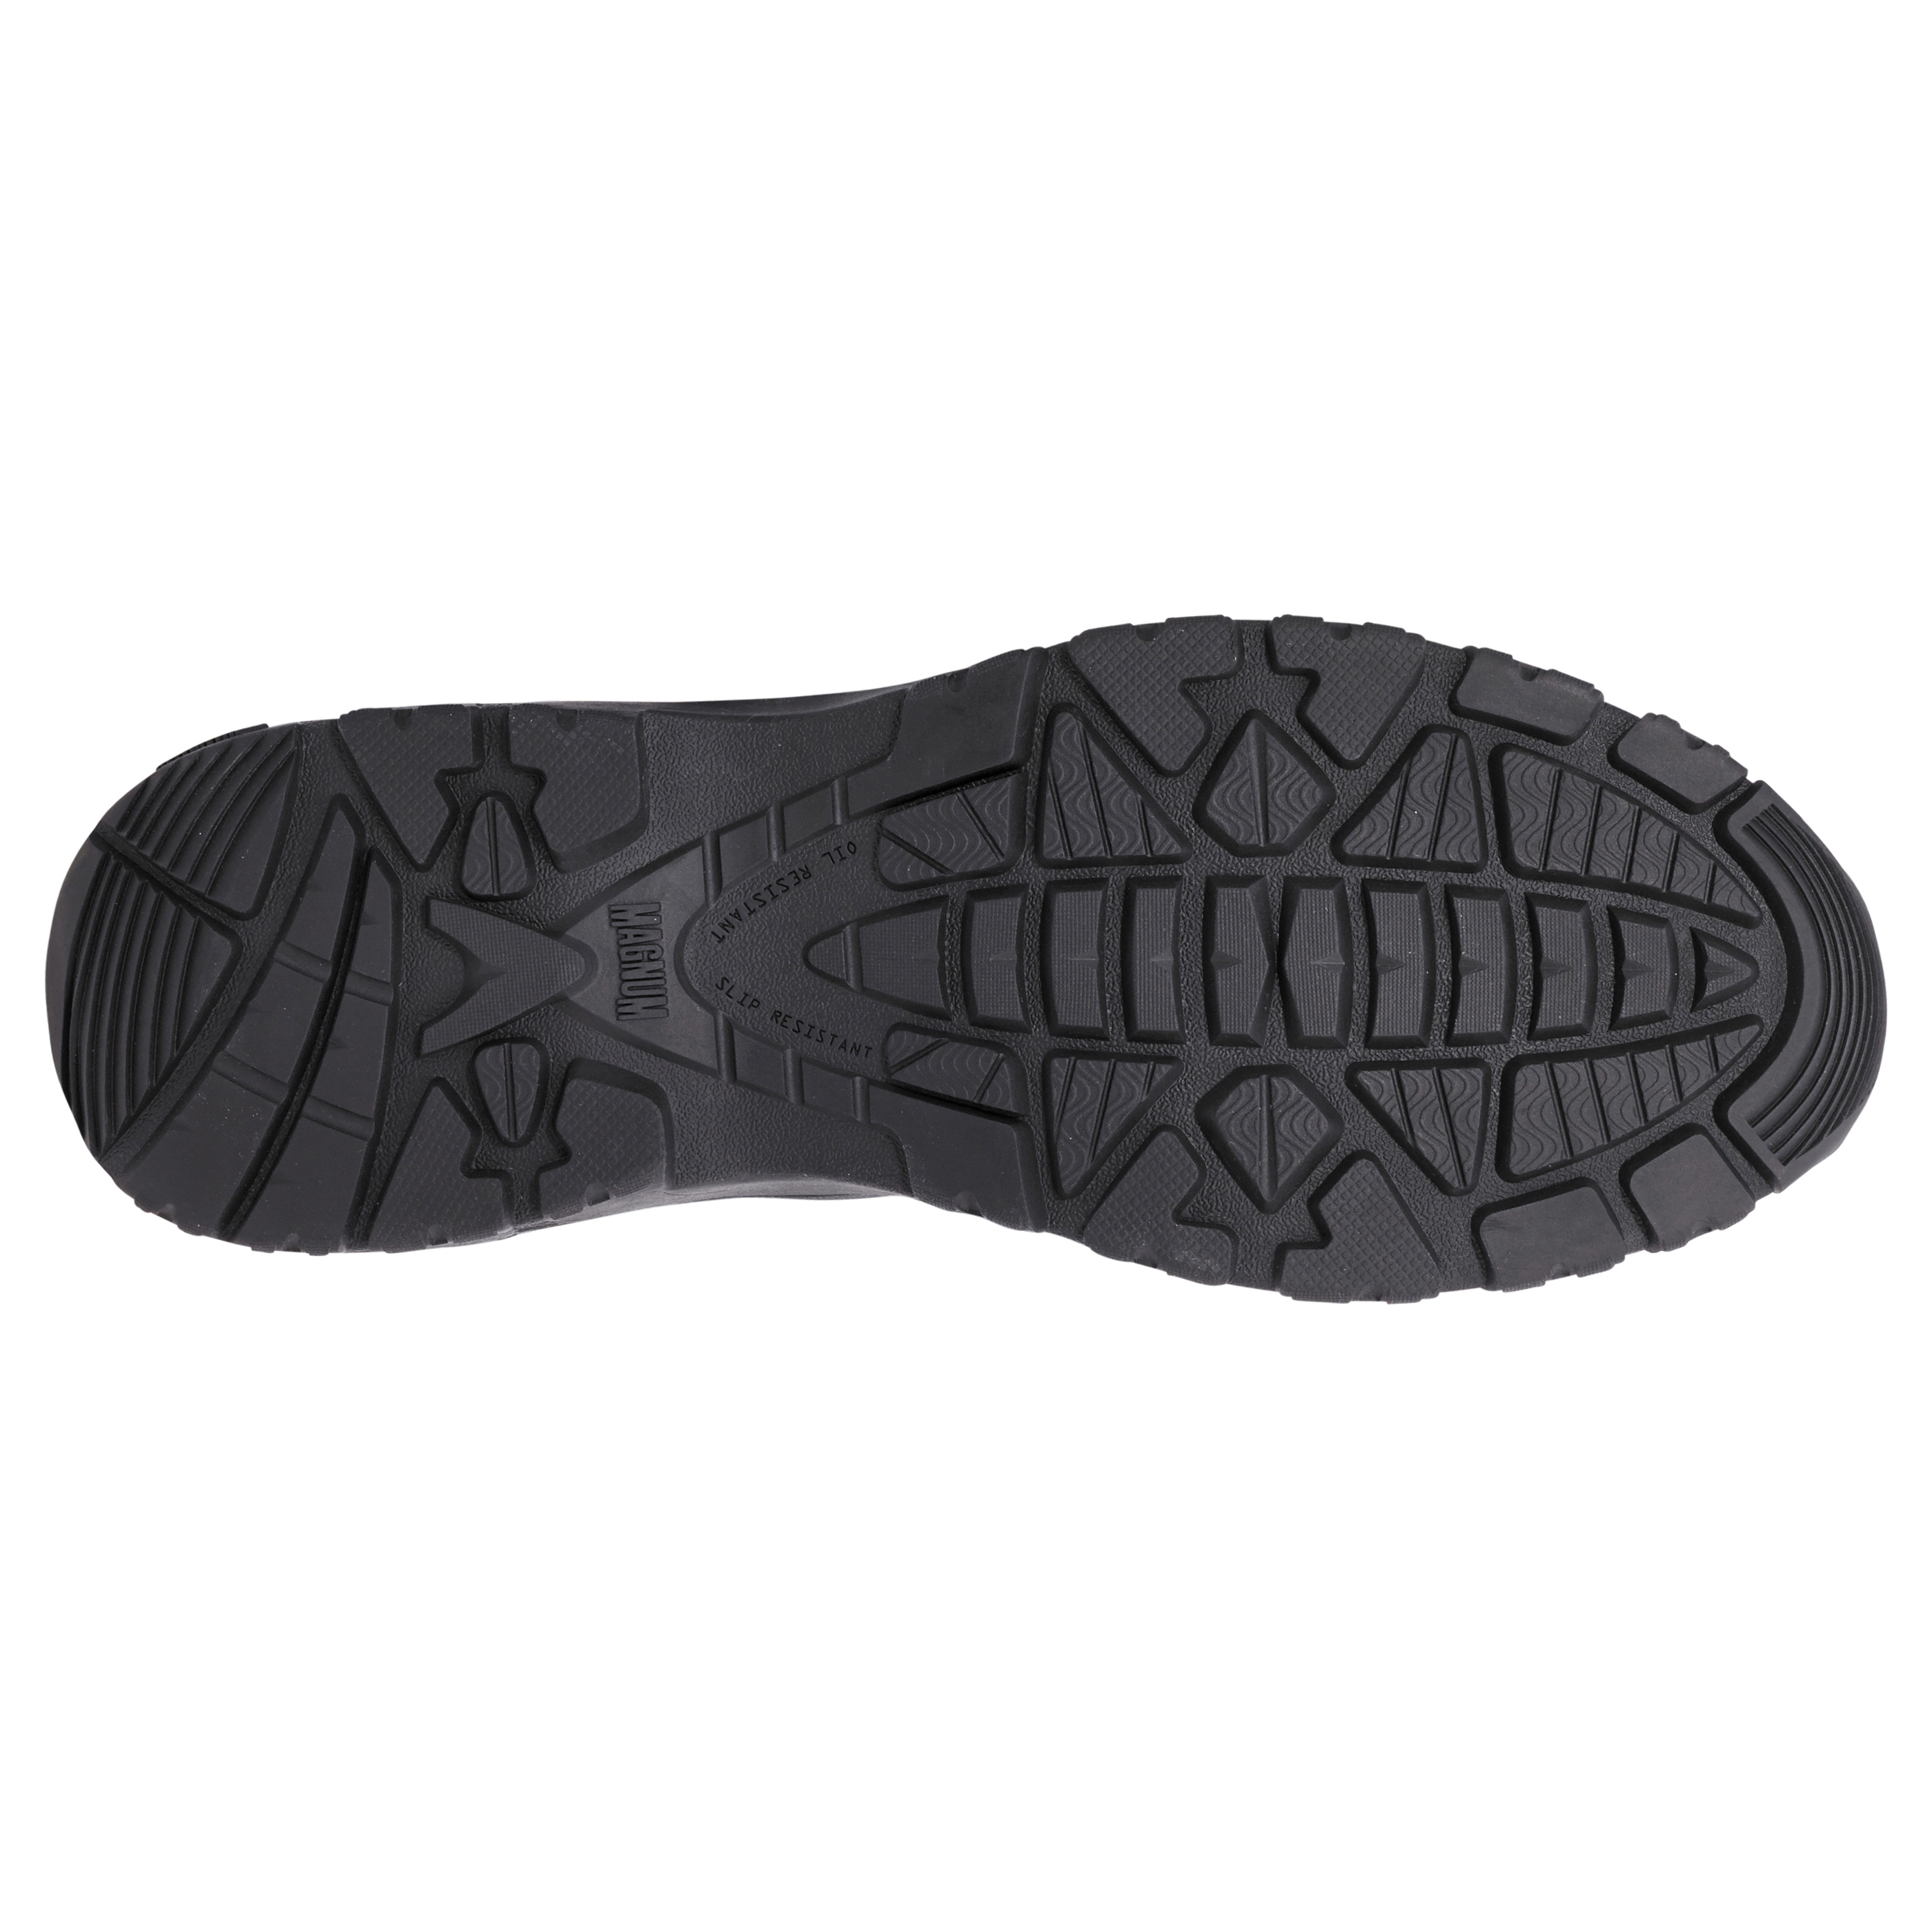 Magnum Tactical/Work Viper Pro 8.0 Size Zip Composite Toe Waterproof Boots 8.5